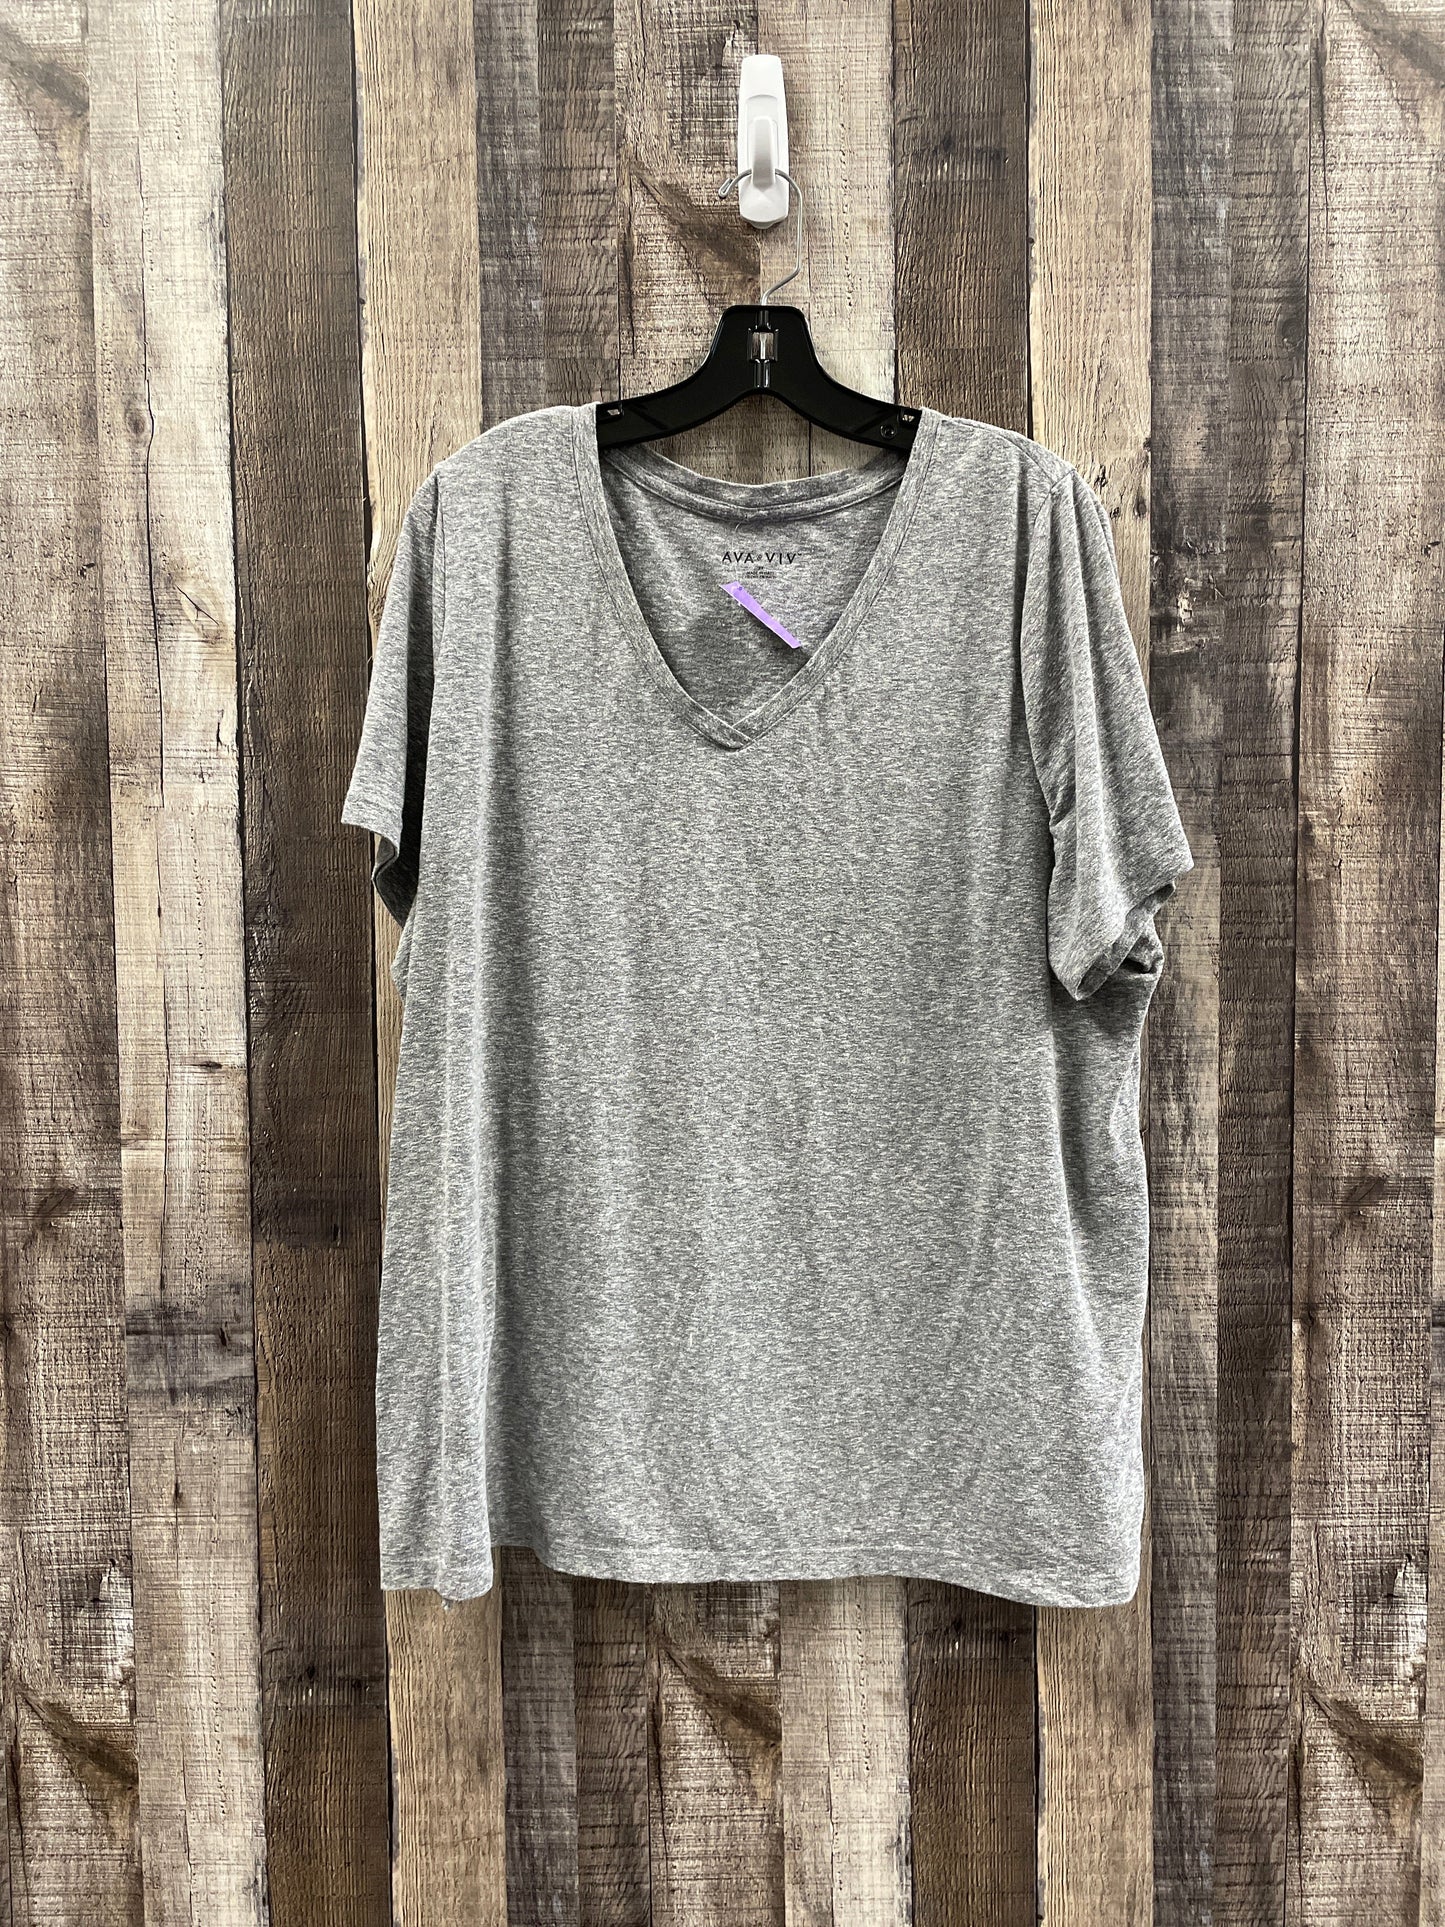 Grey Top Short Sleeve Basic Ava & Viv, Size 2x